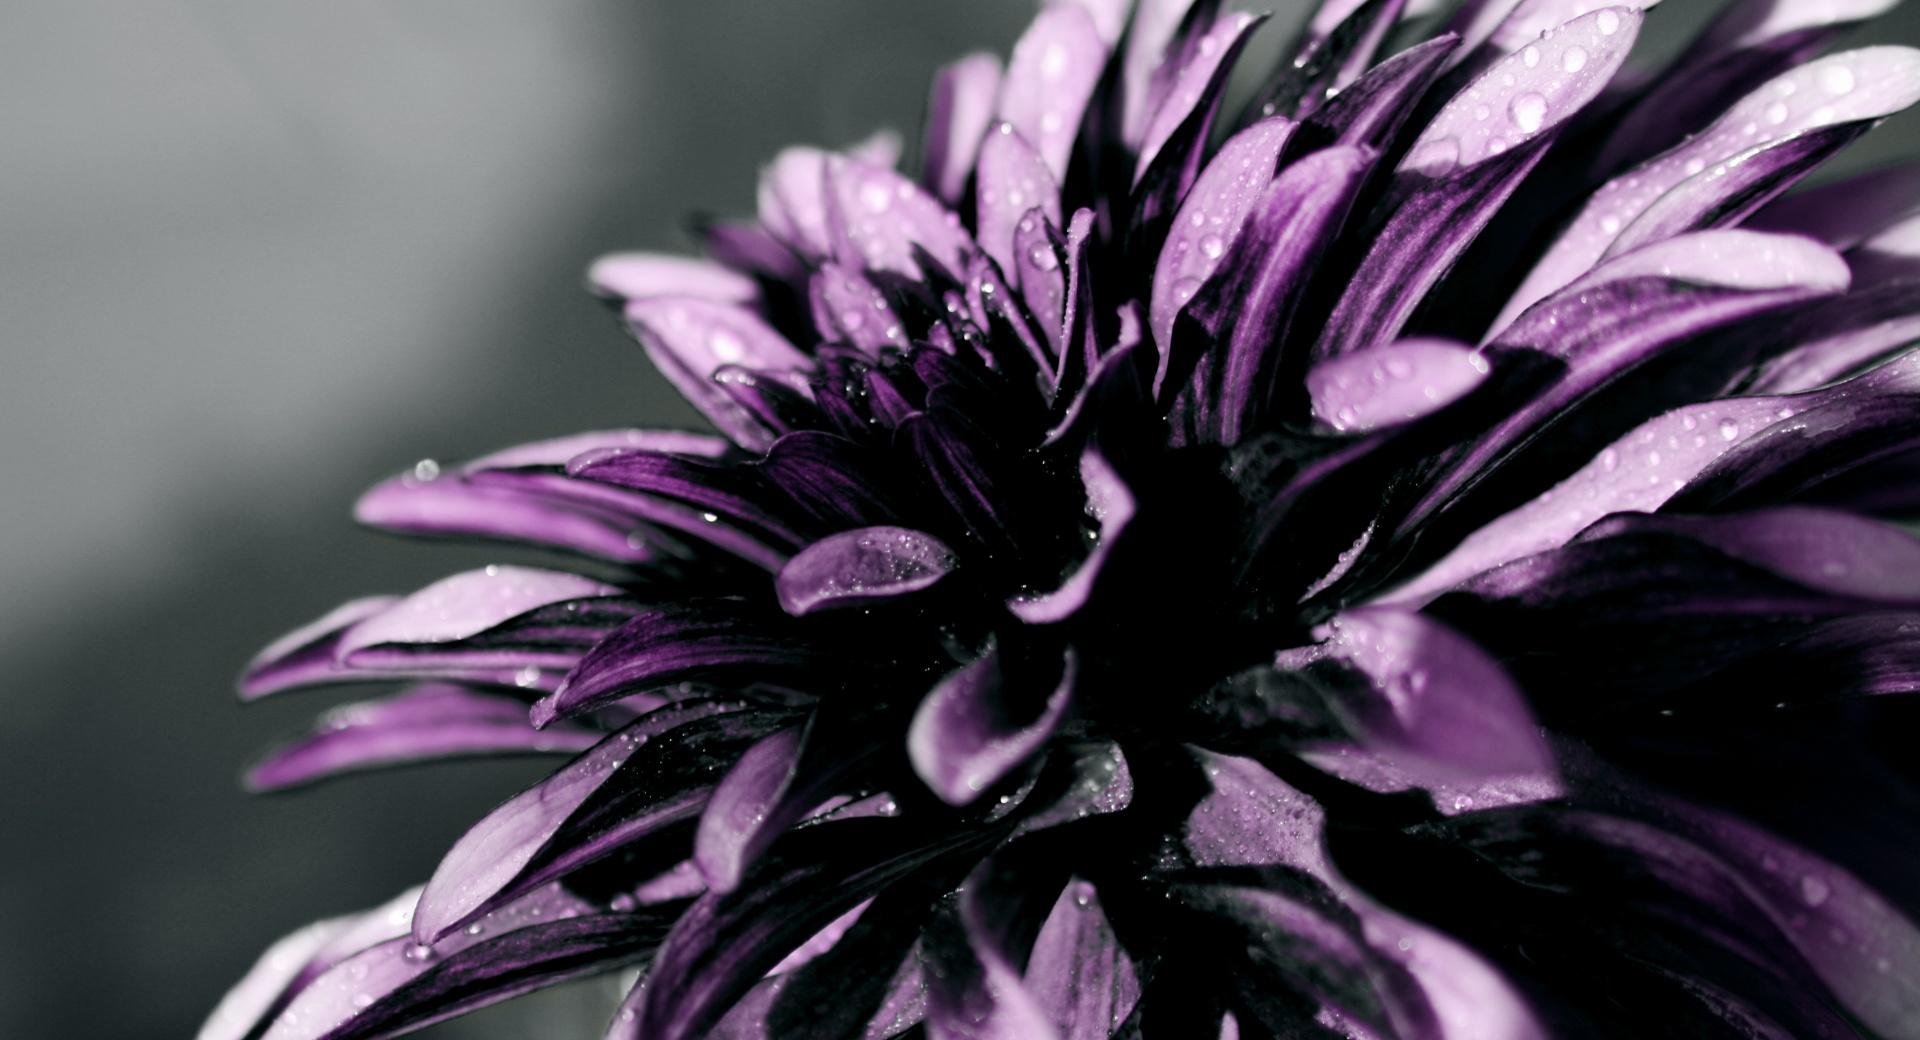 Purple Chrysanthemum Macro at 1280 x 960 size wallpapers HD quality